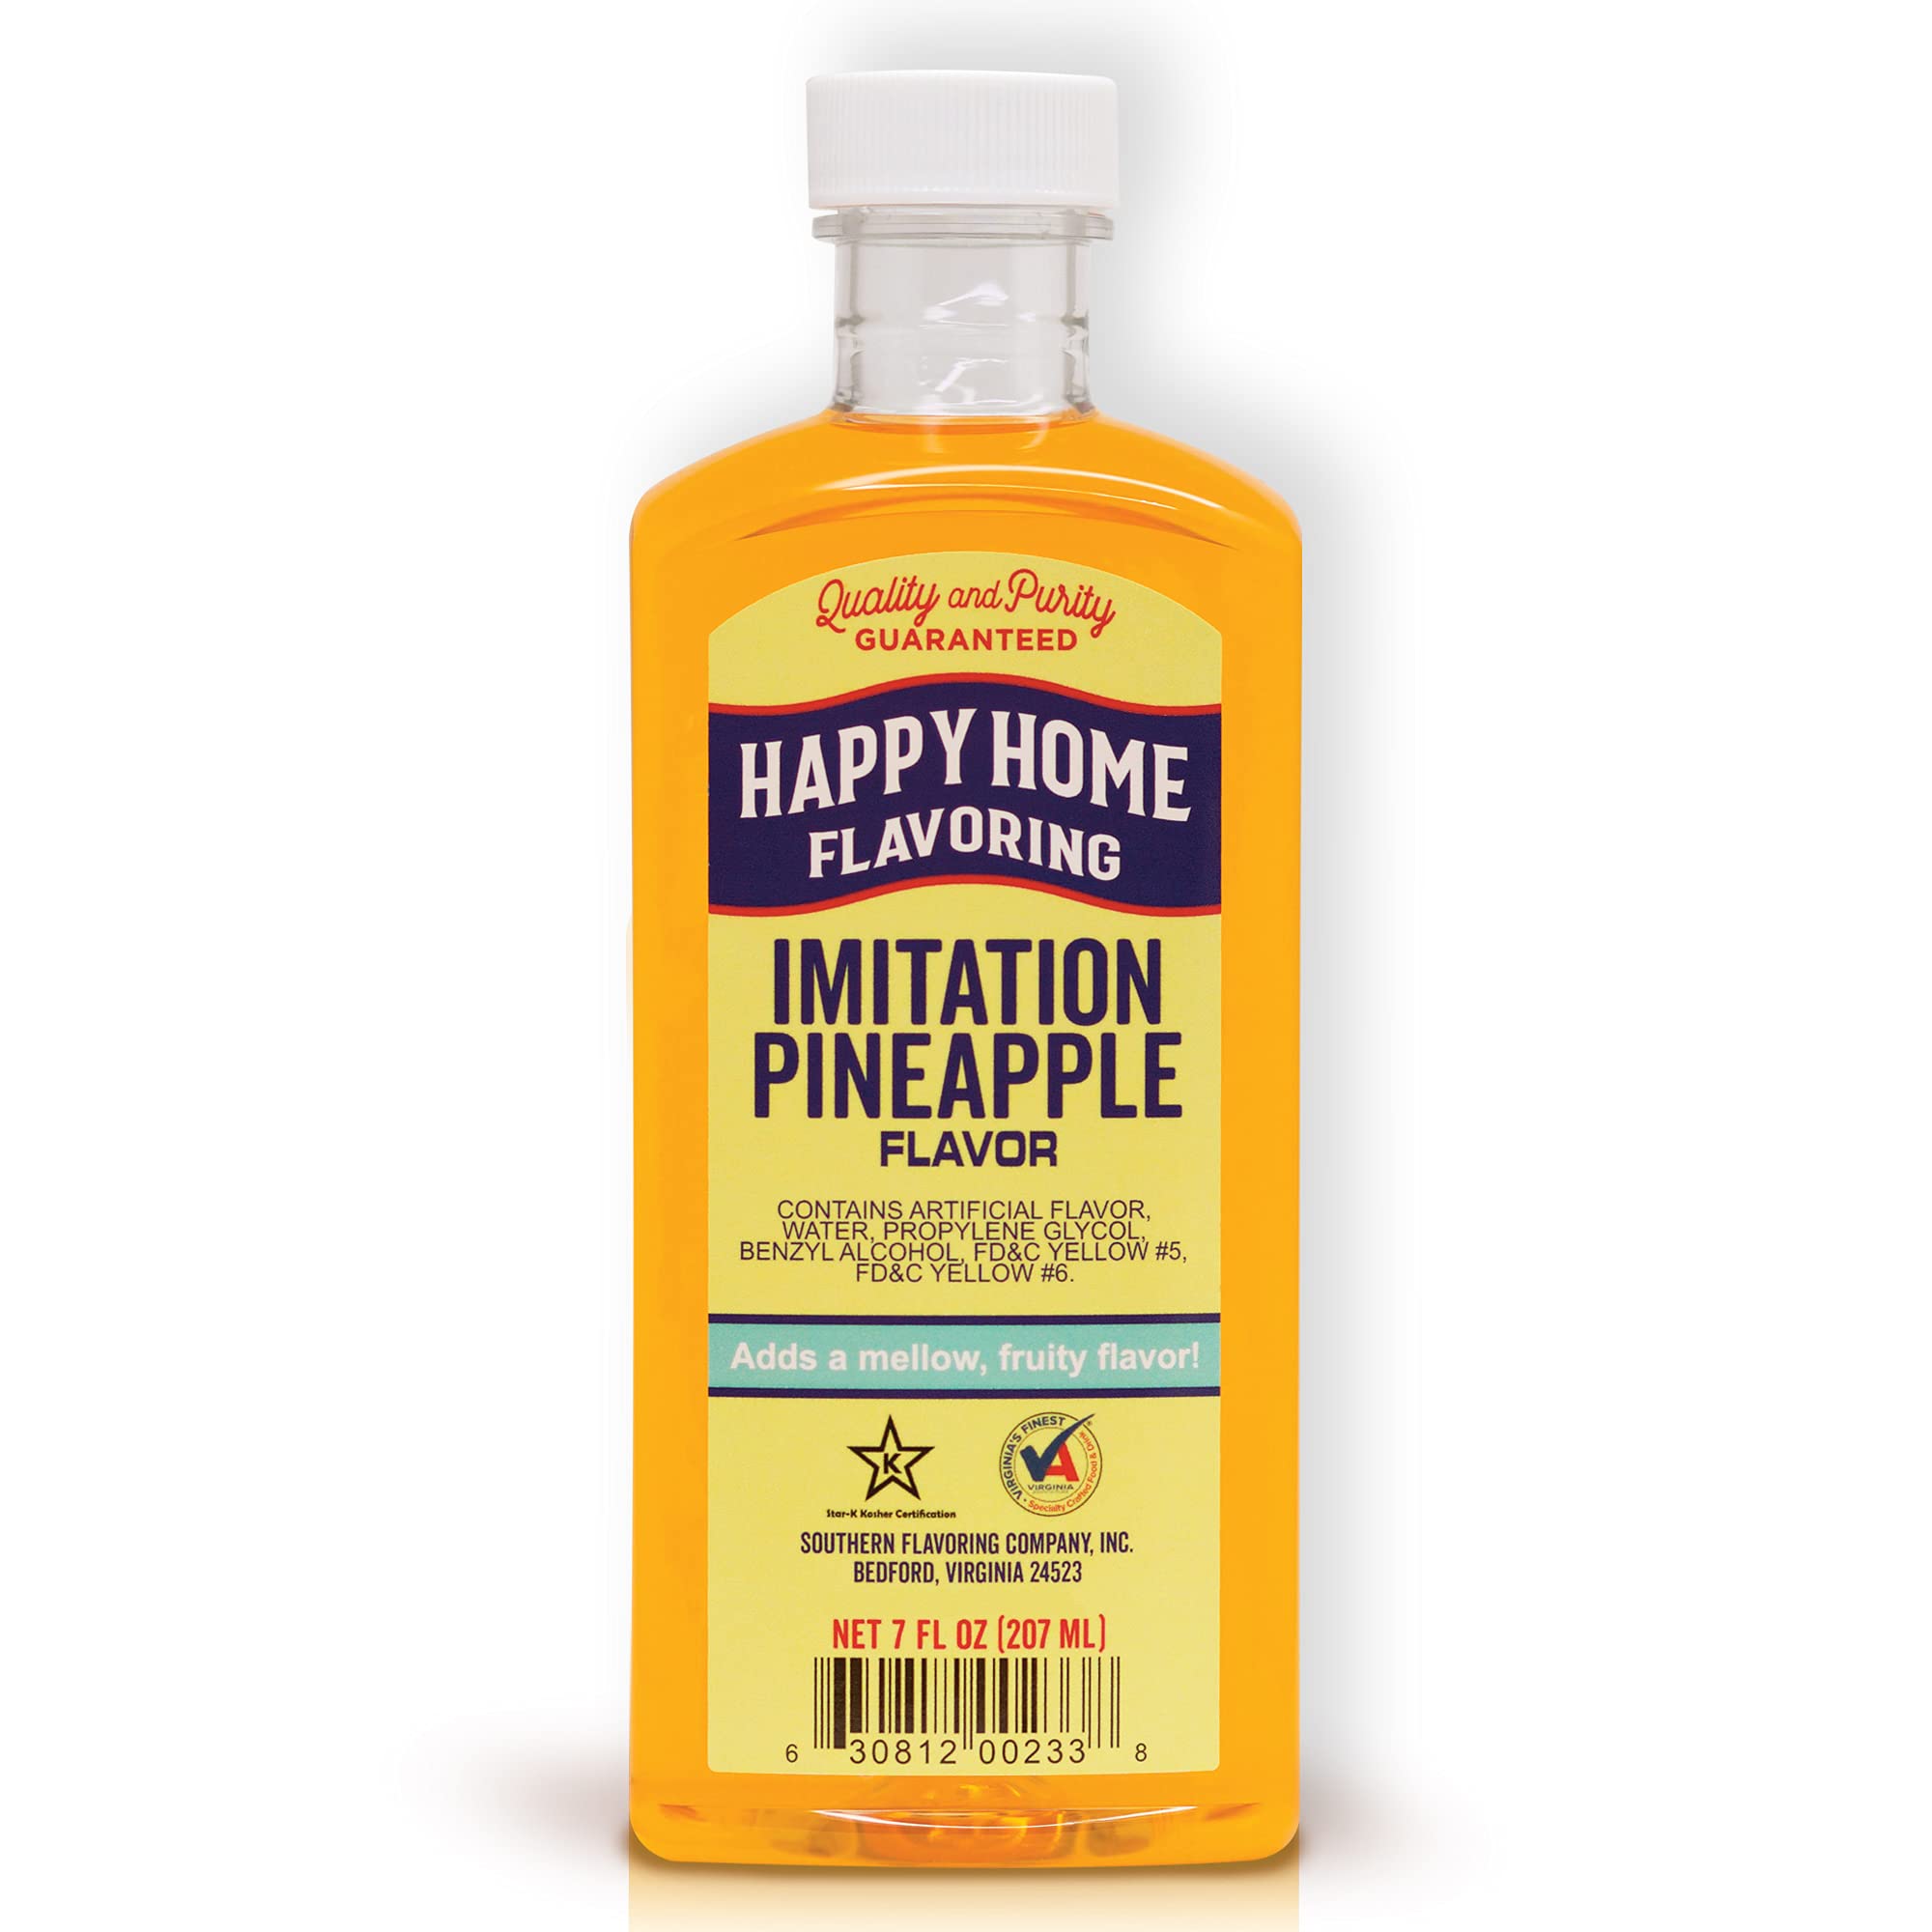 Happy Home Natural Orange Flavoring, Non-Alcoholic, Certified Kosher, 7 oz.  Plastic Bottle. 